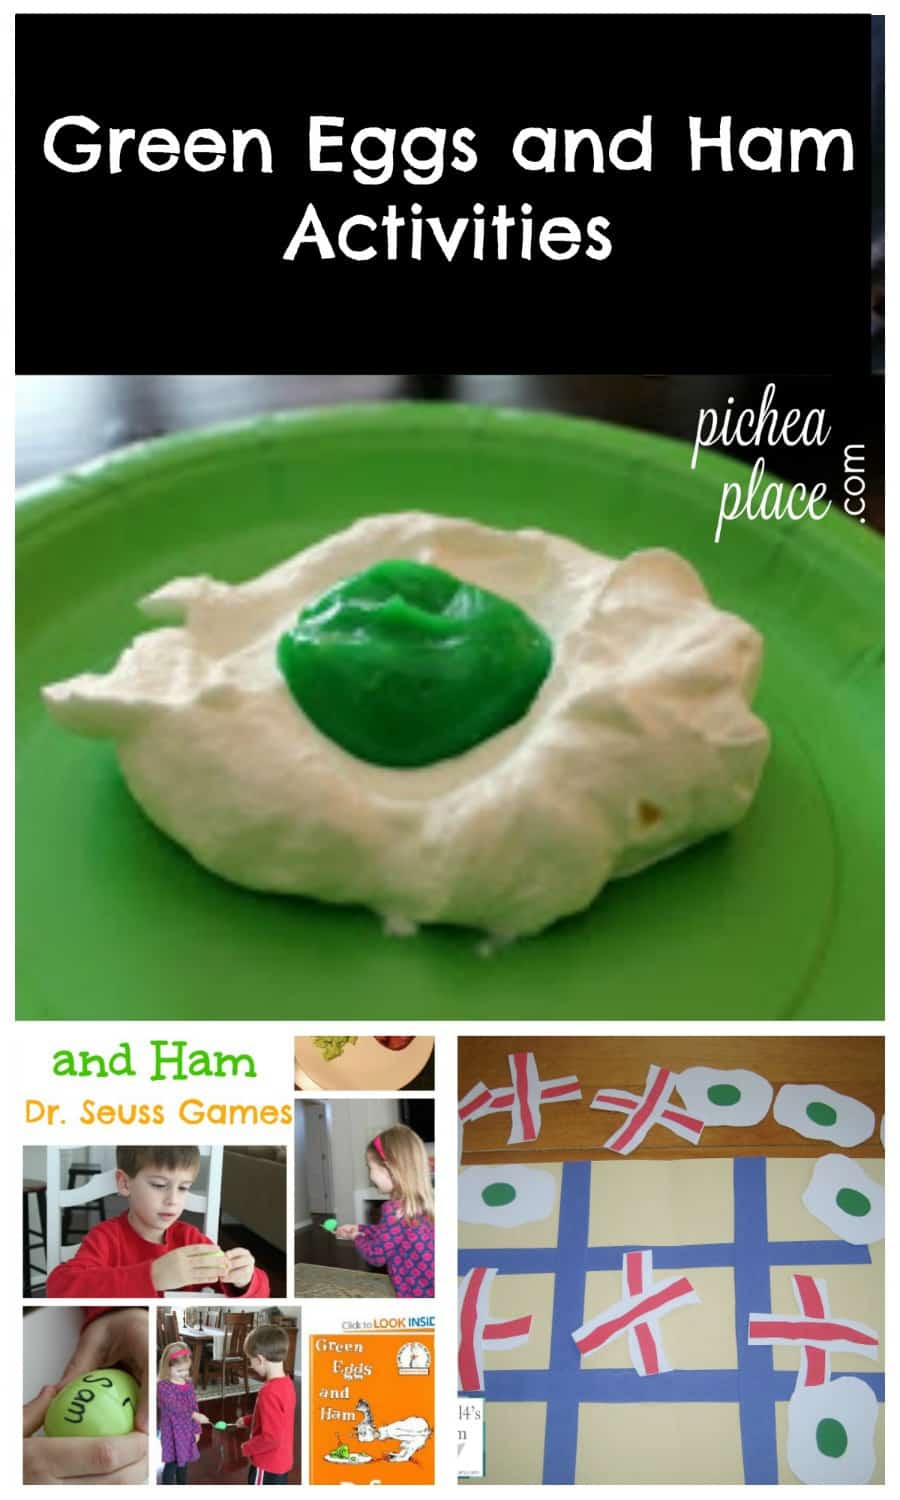 Green Eggs and Ham activities for kids | Dr Seuss activities for kids